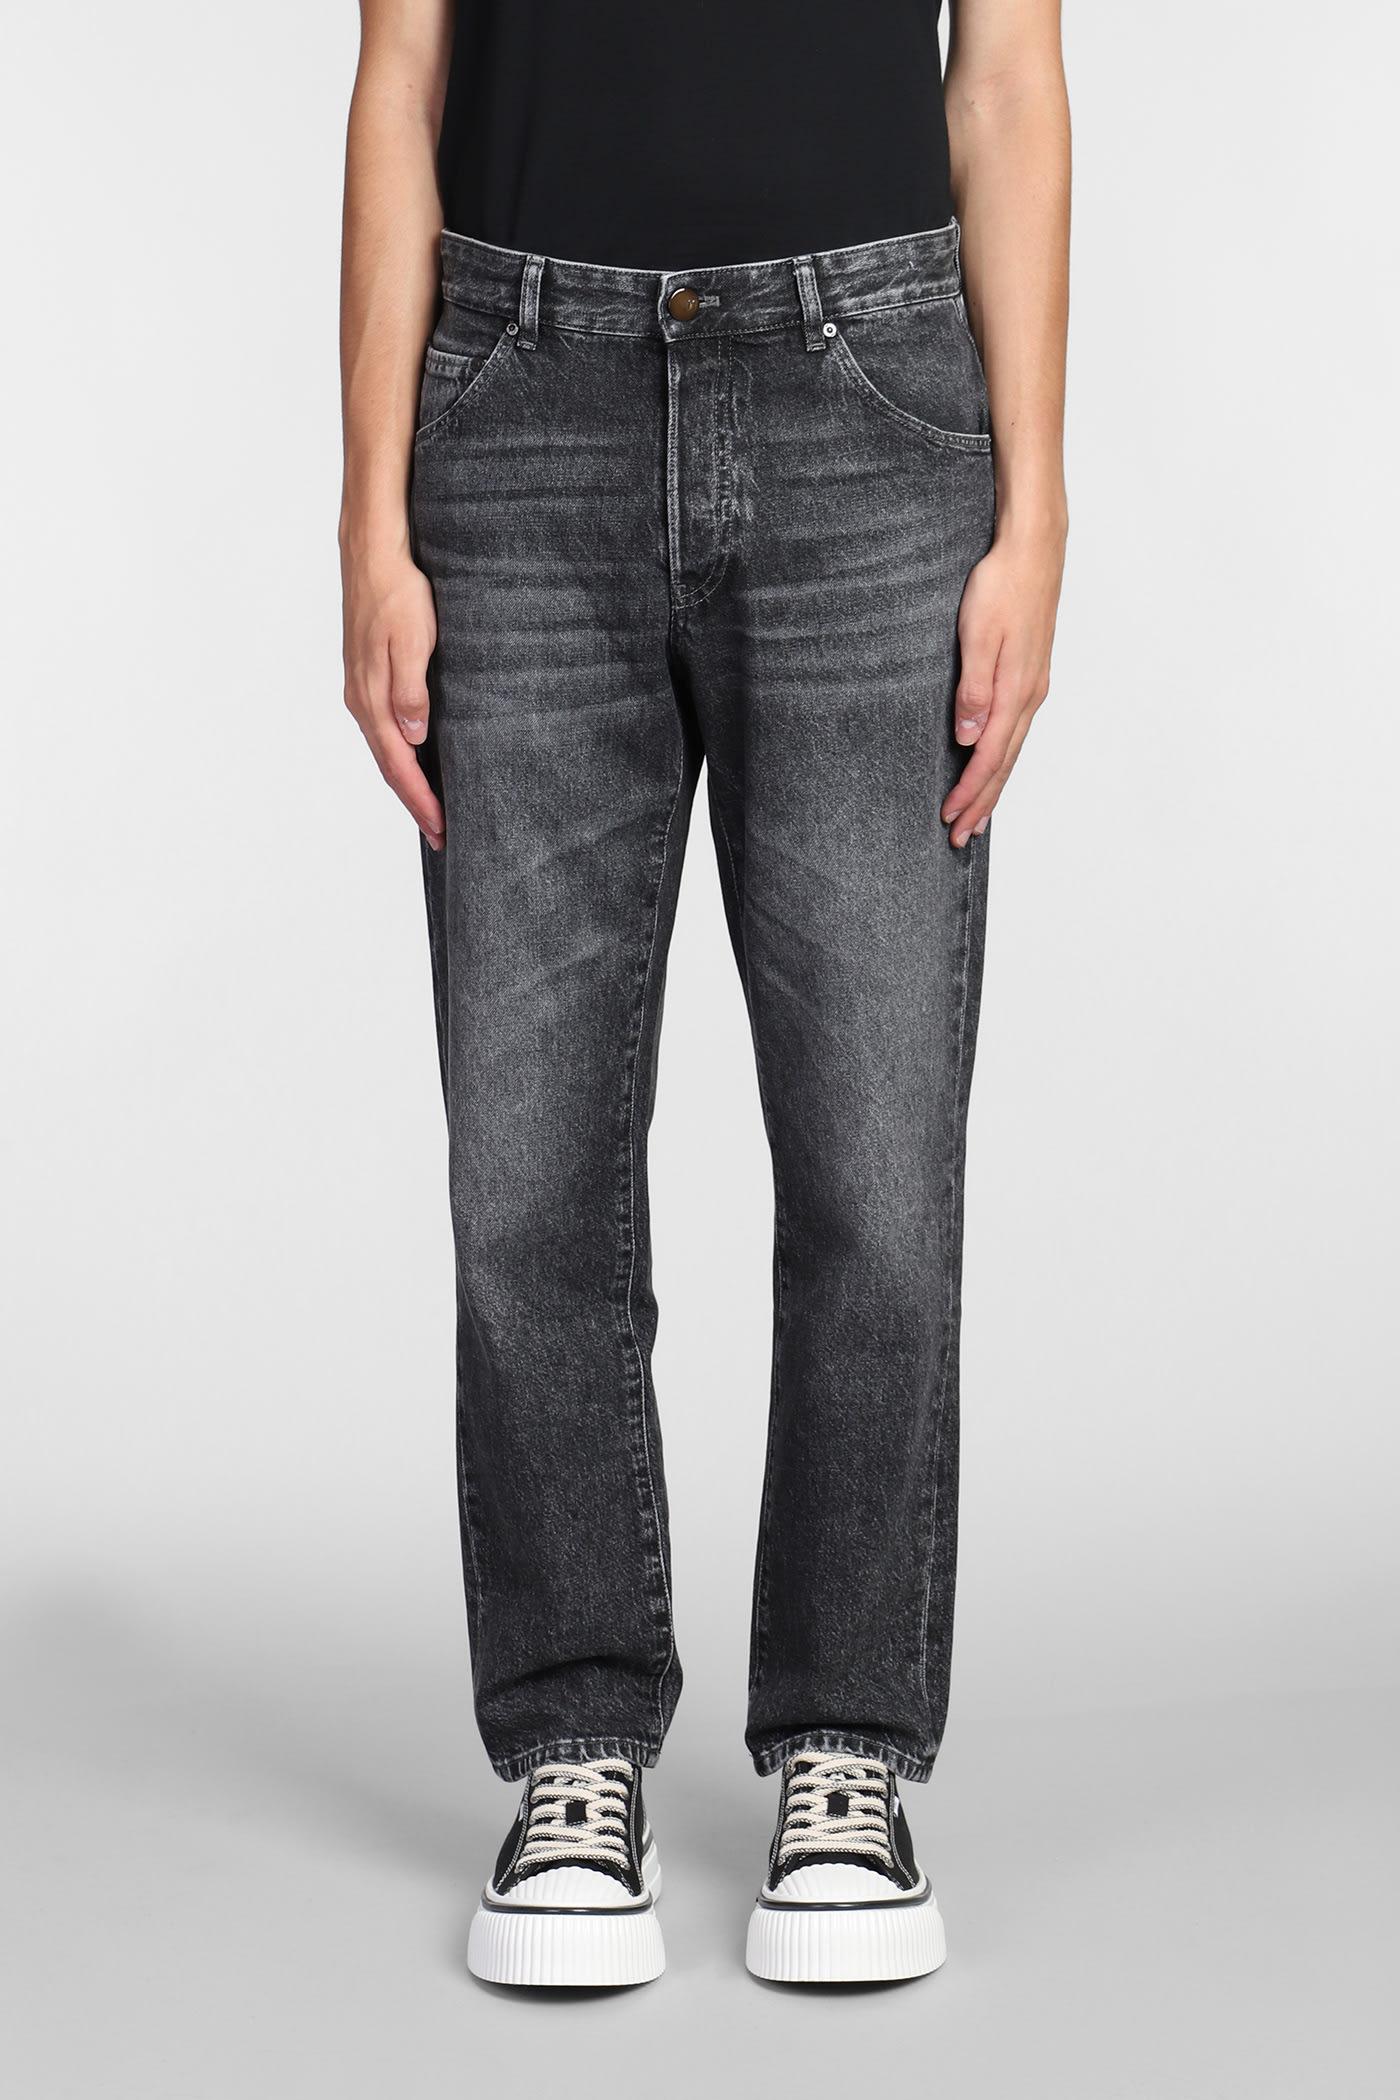 PT01 Jeans In Black Cotton for Men | Lyst